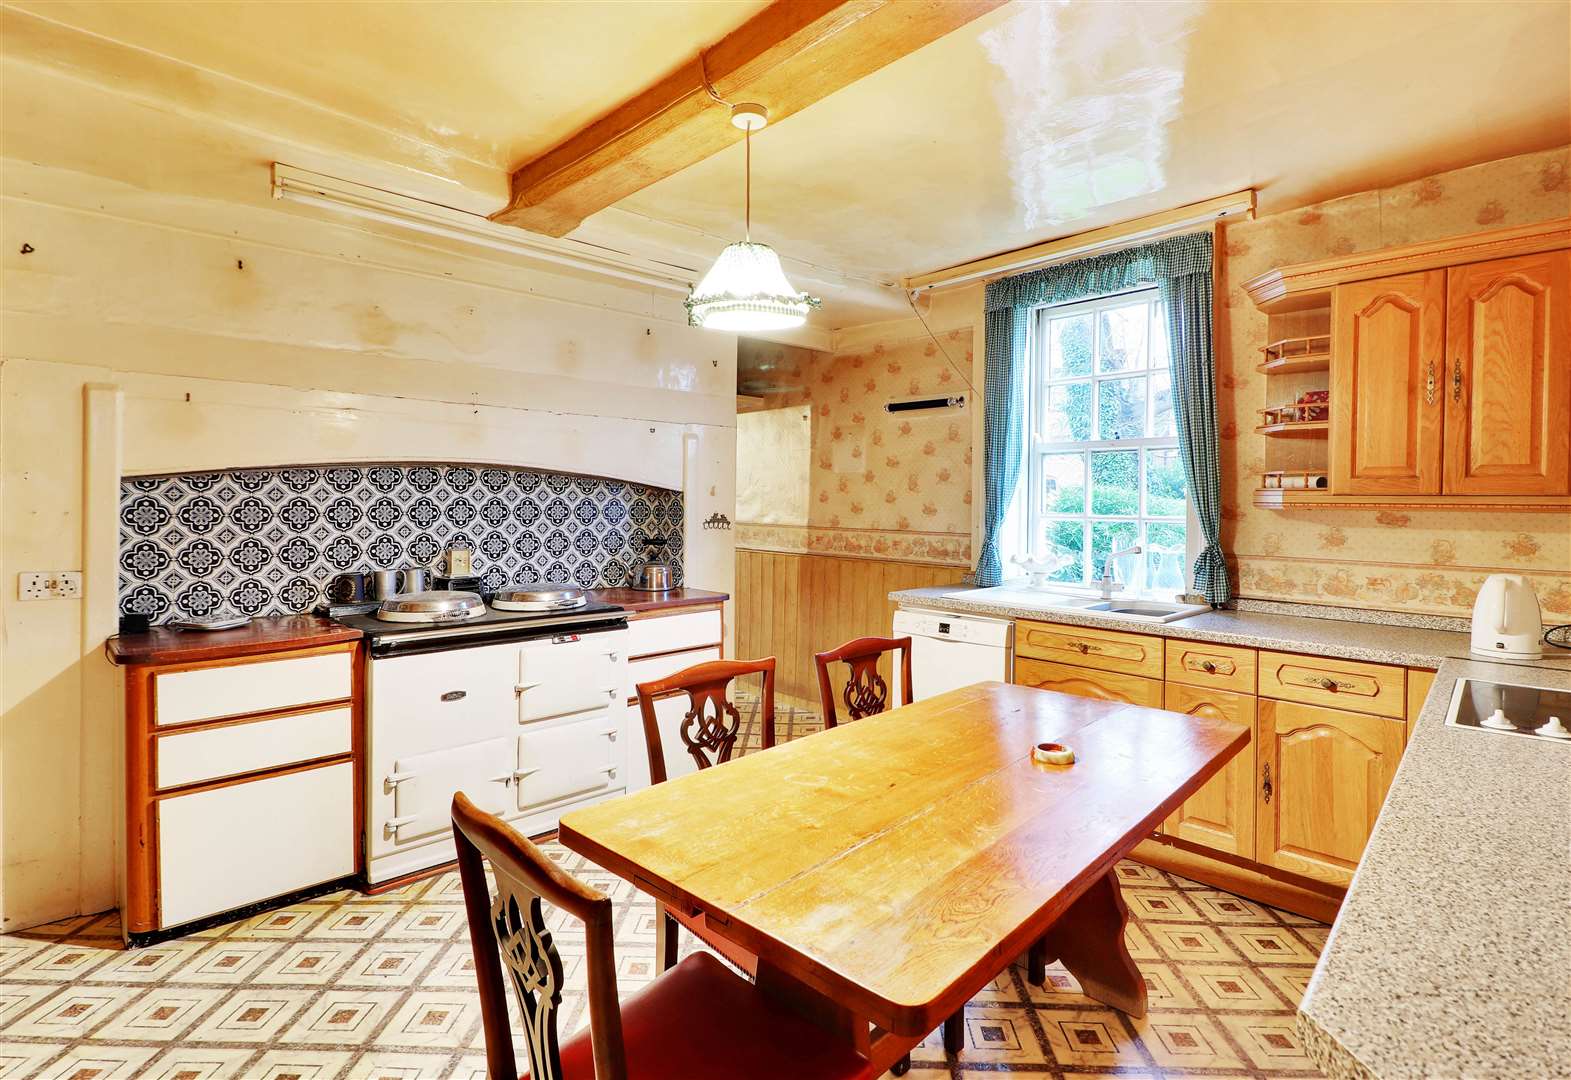 The kitchen inside the Grade II listed property. Photo: BTF Partnership